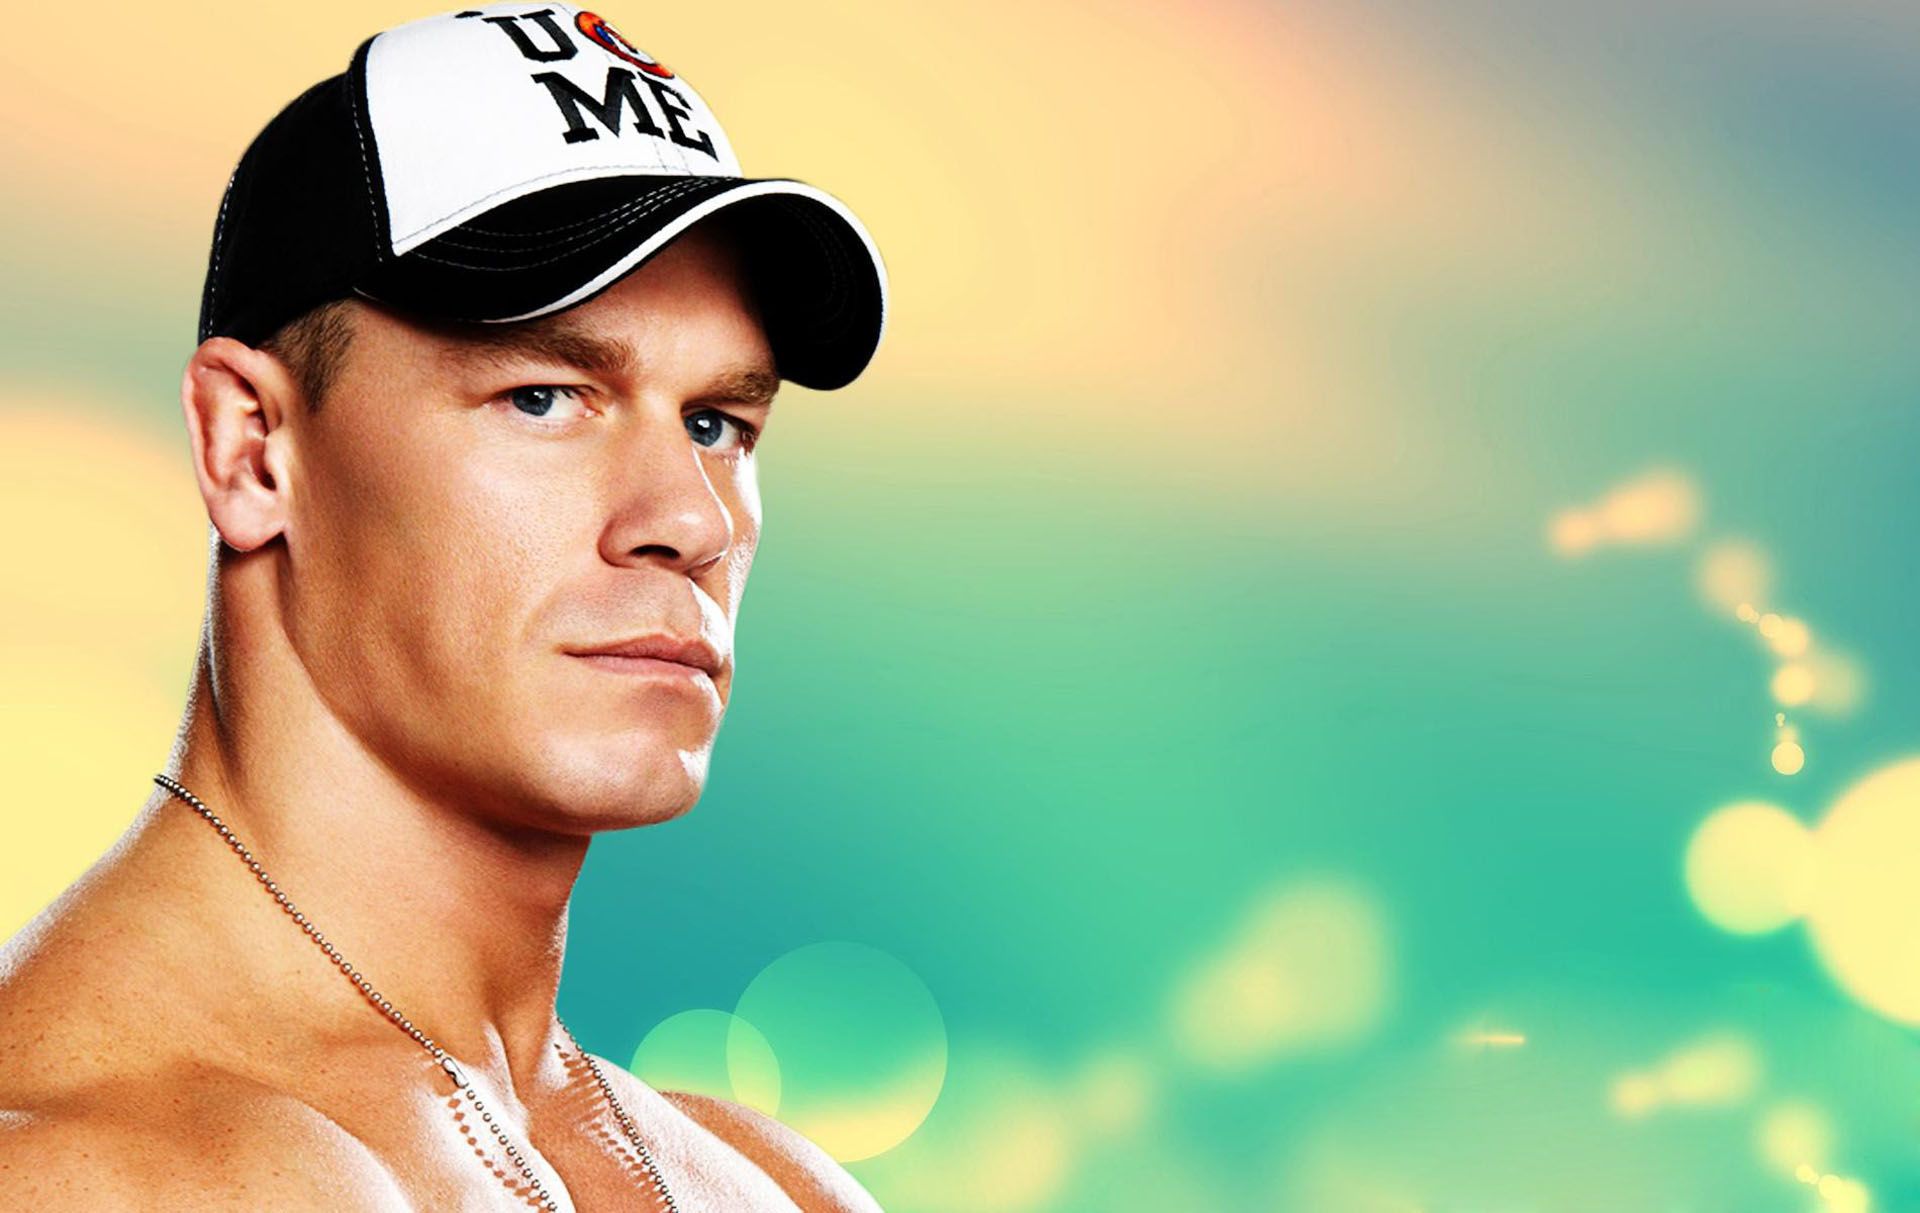 WWE John Cena Wallpapers 2016 HD - Wallpaper Cave